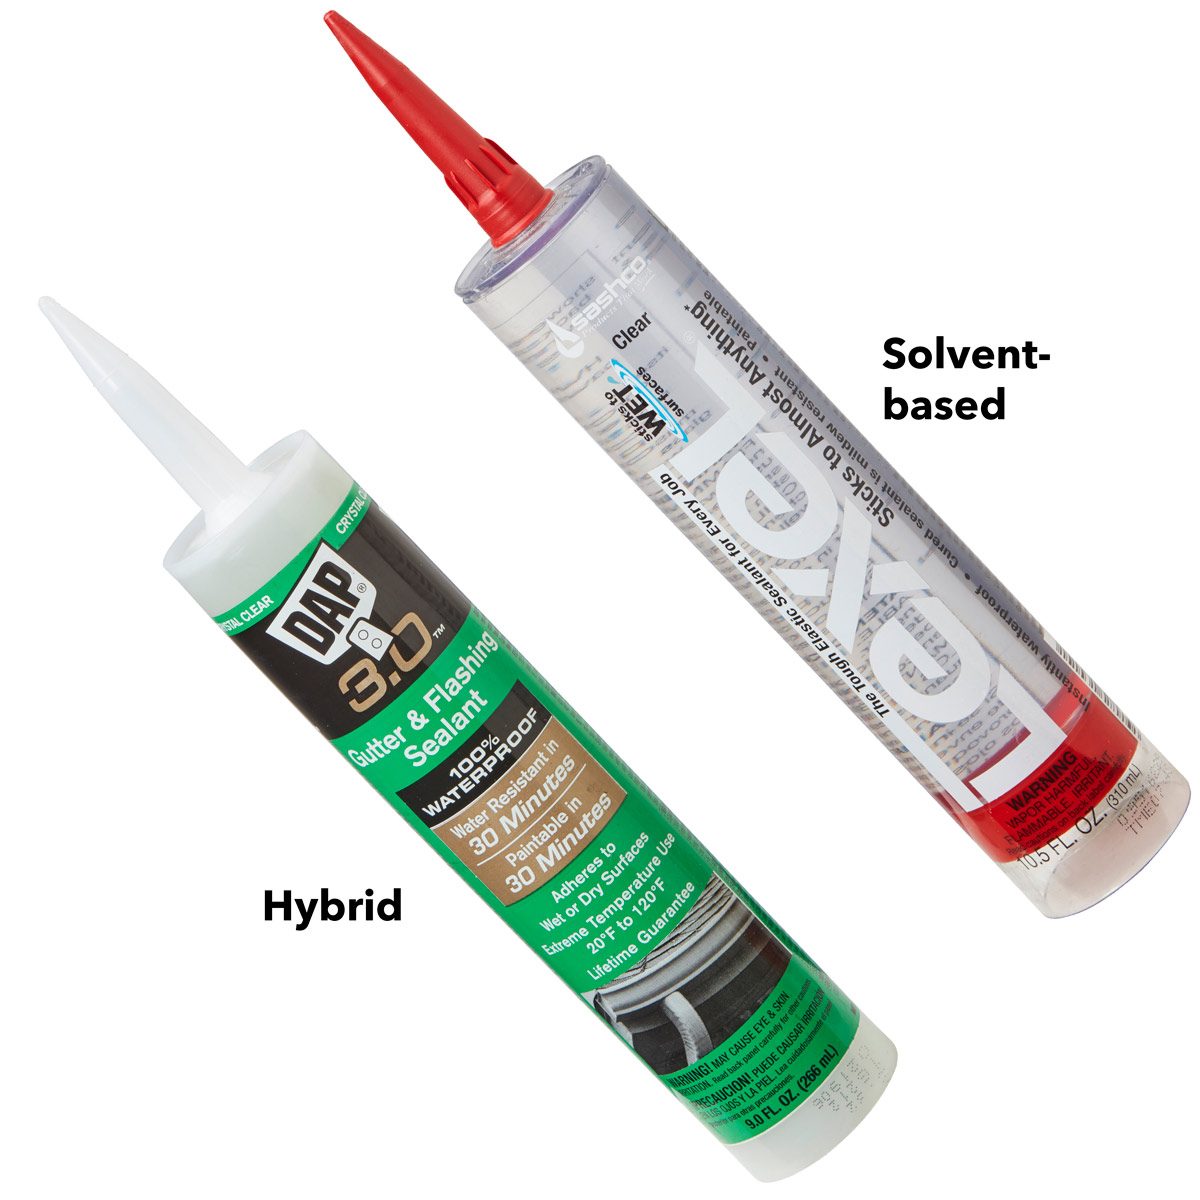 hybrid and solvent-based caulk sealants 